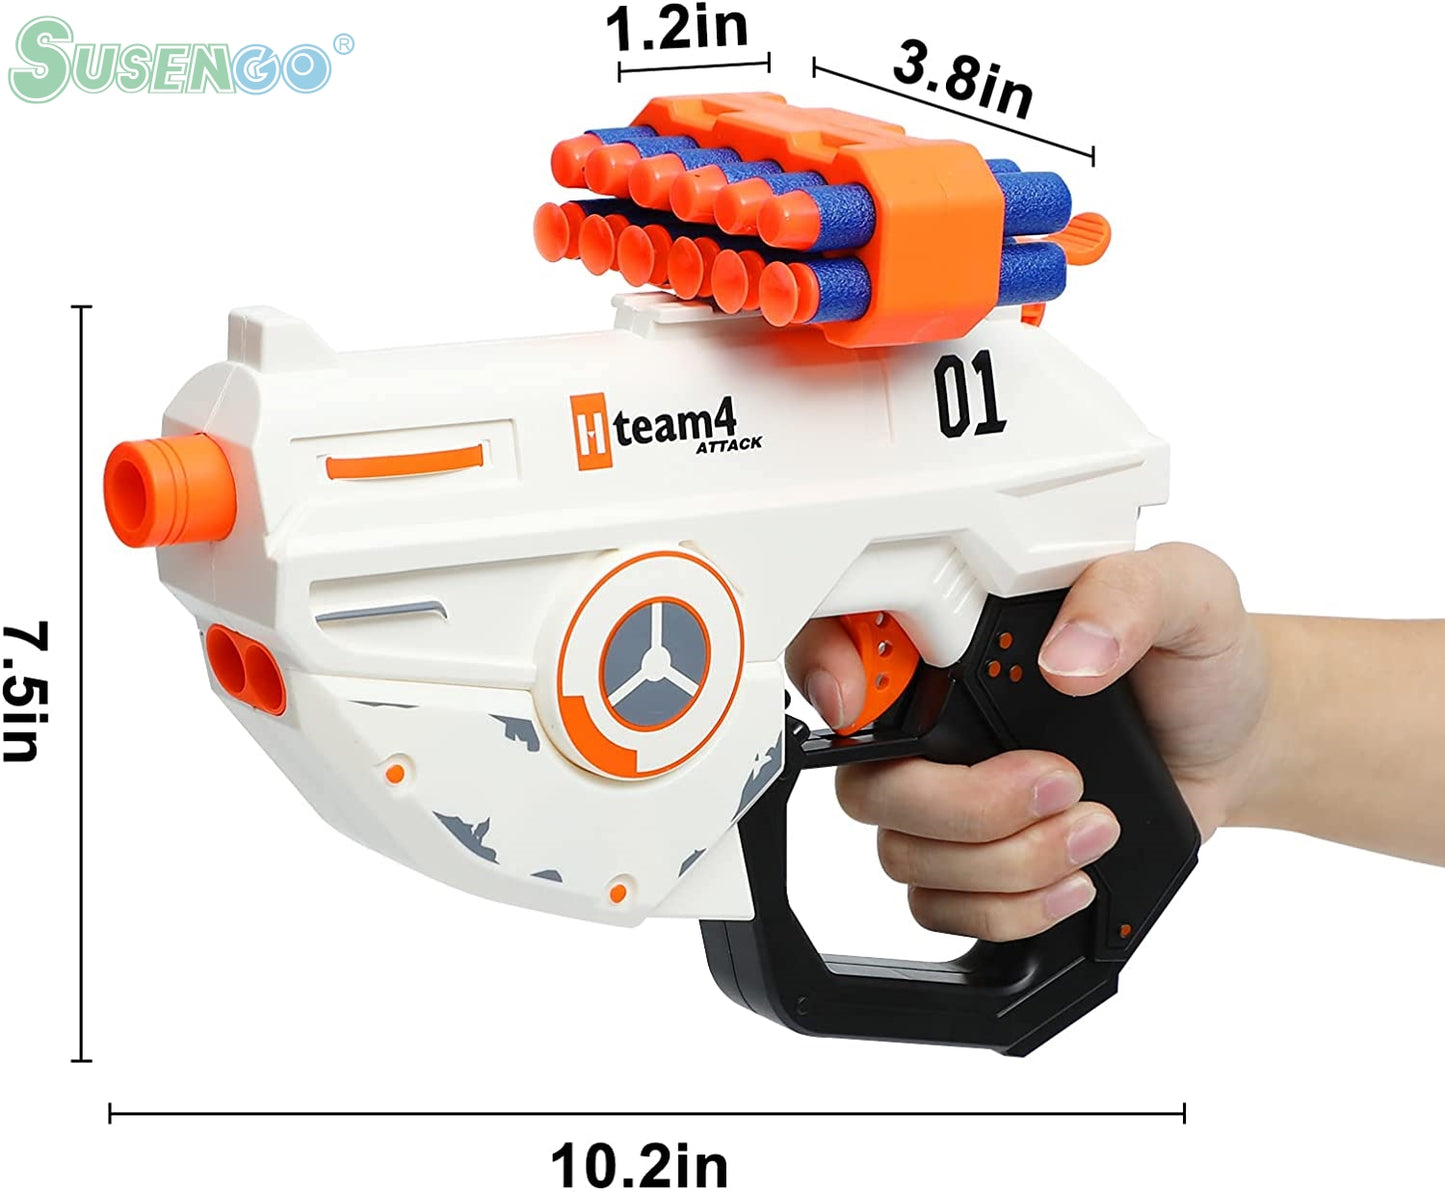 SUSENGO Toy pistols Mini Pistol